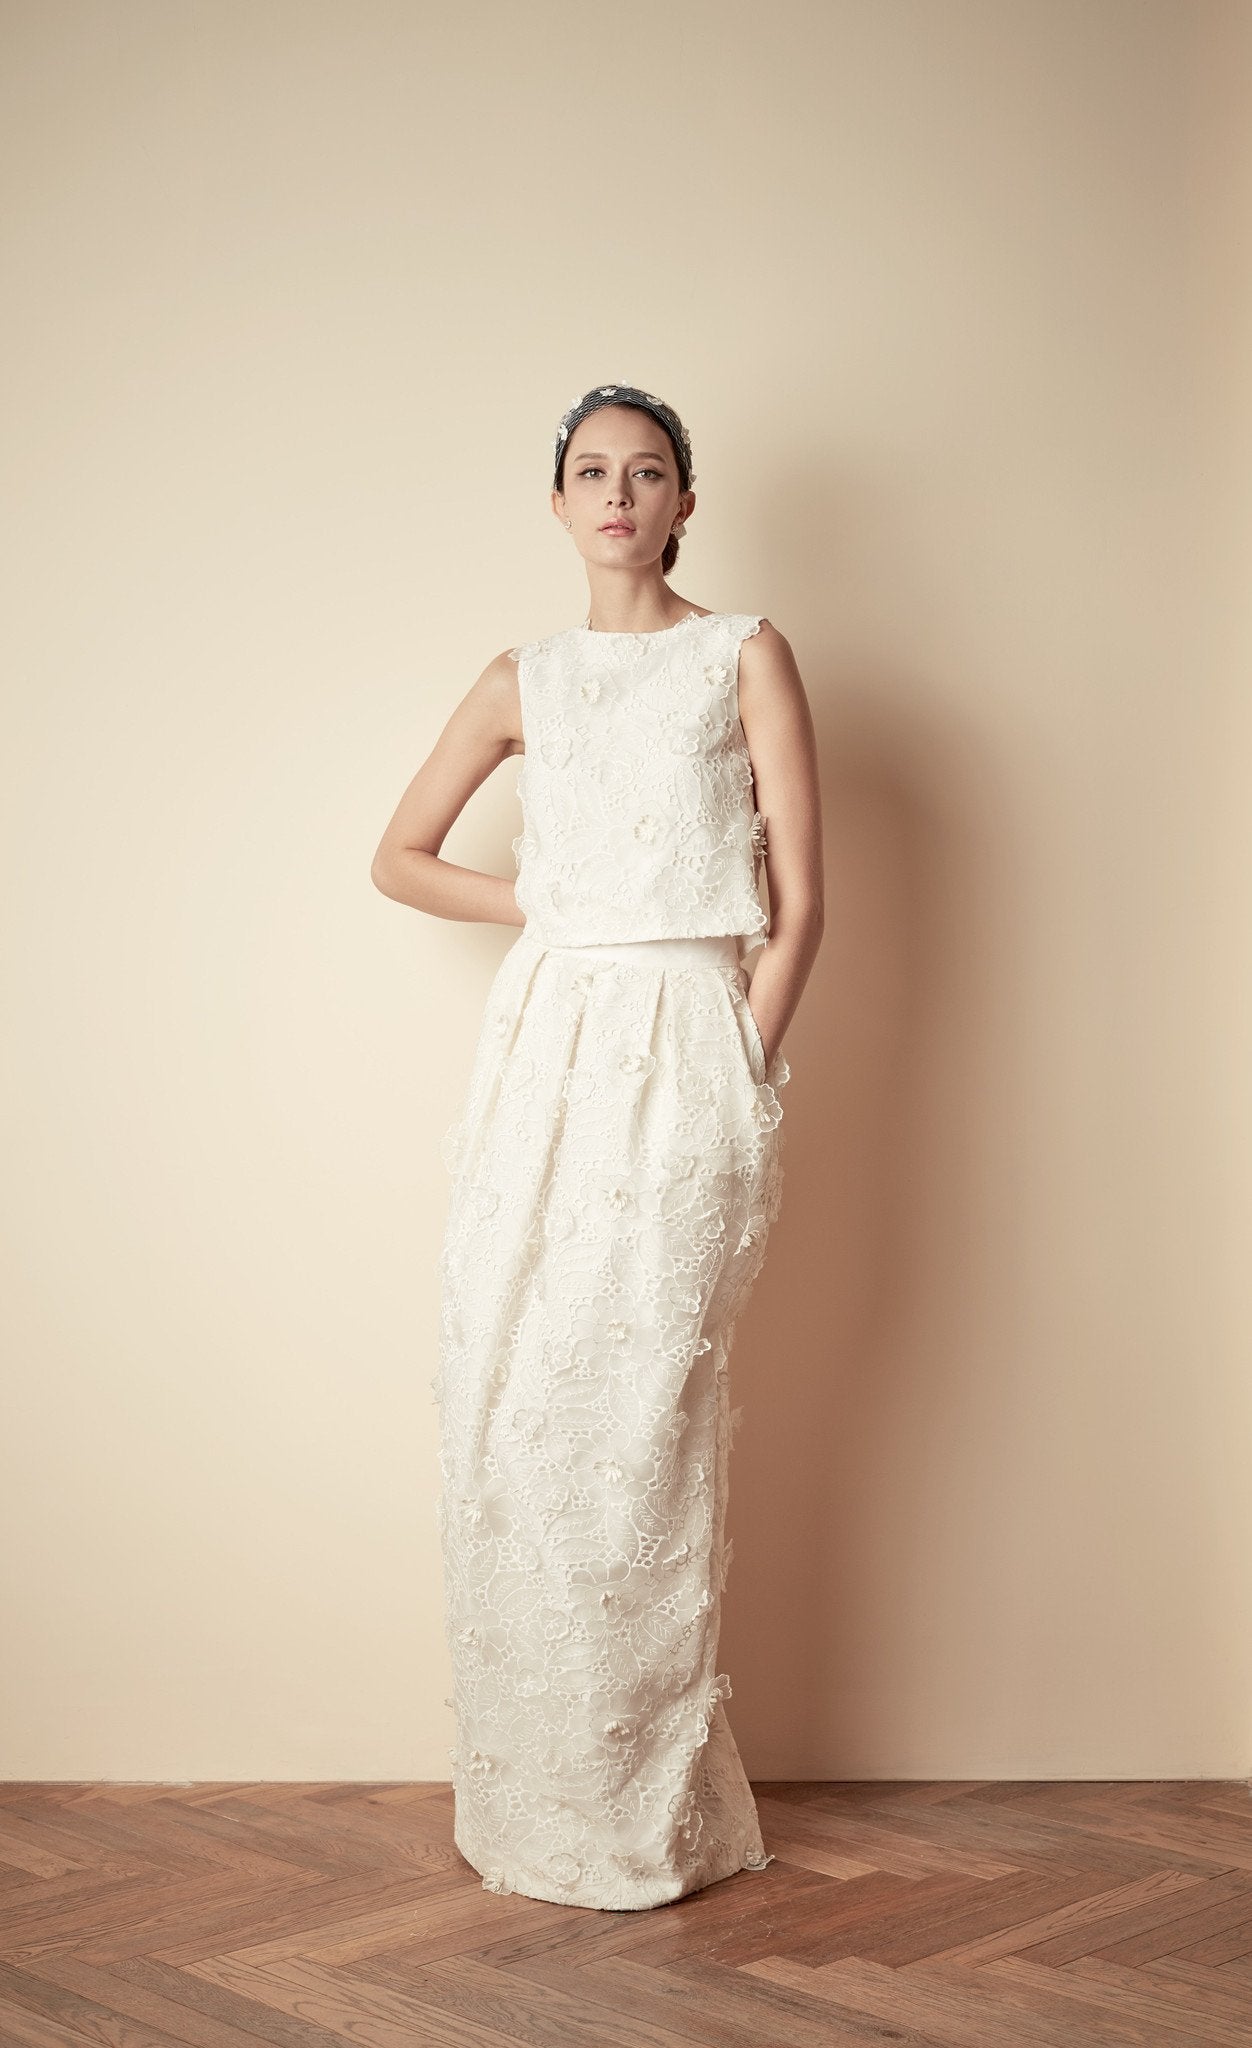 Style: LYNN 3D Floral High Waisted Lantern Skirt Peony Rice